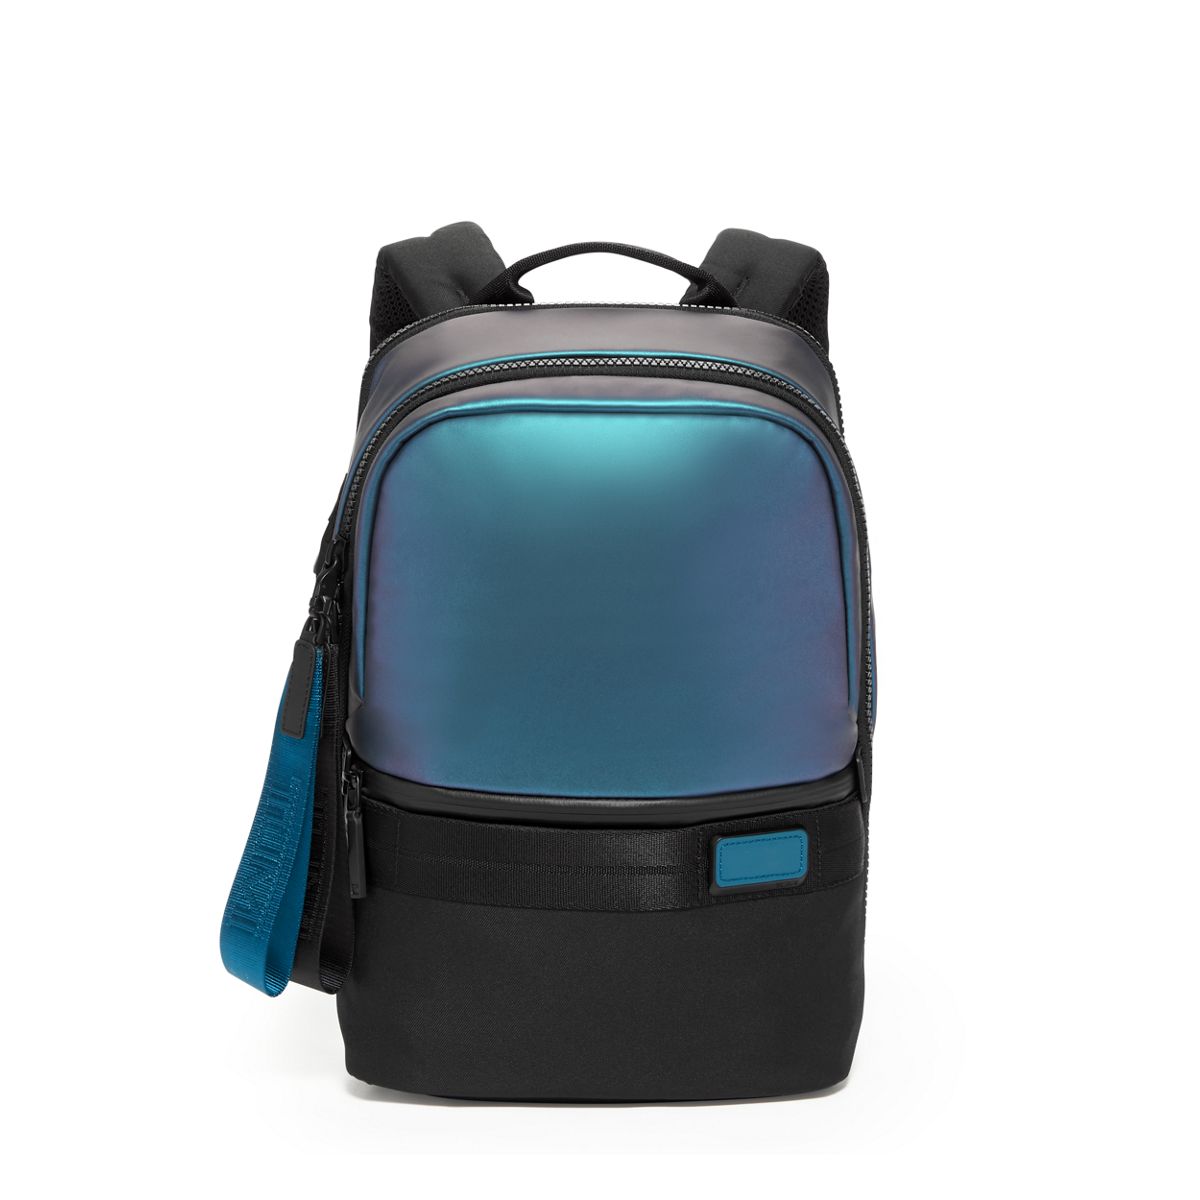 Tahoe Nottaway Backpack in Iridescent Blue